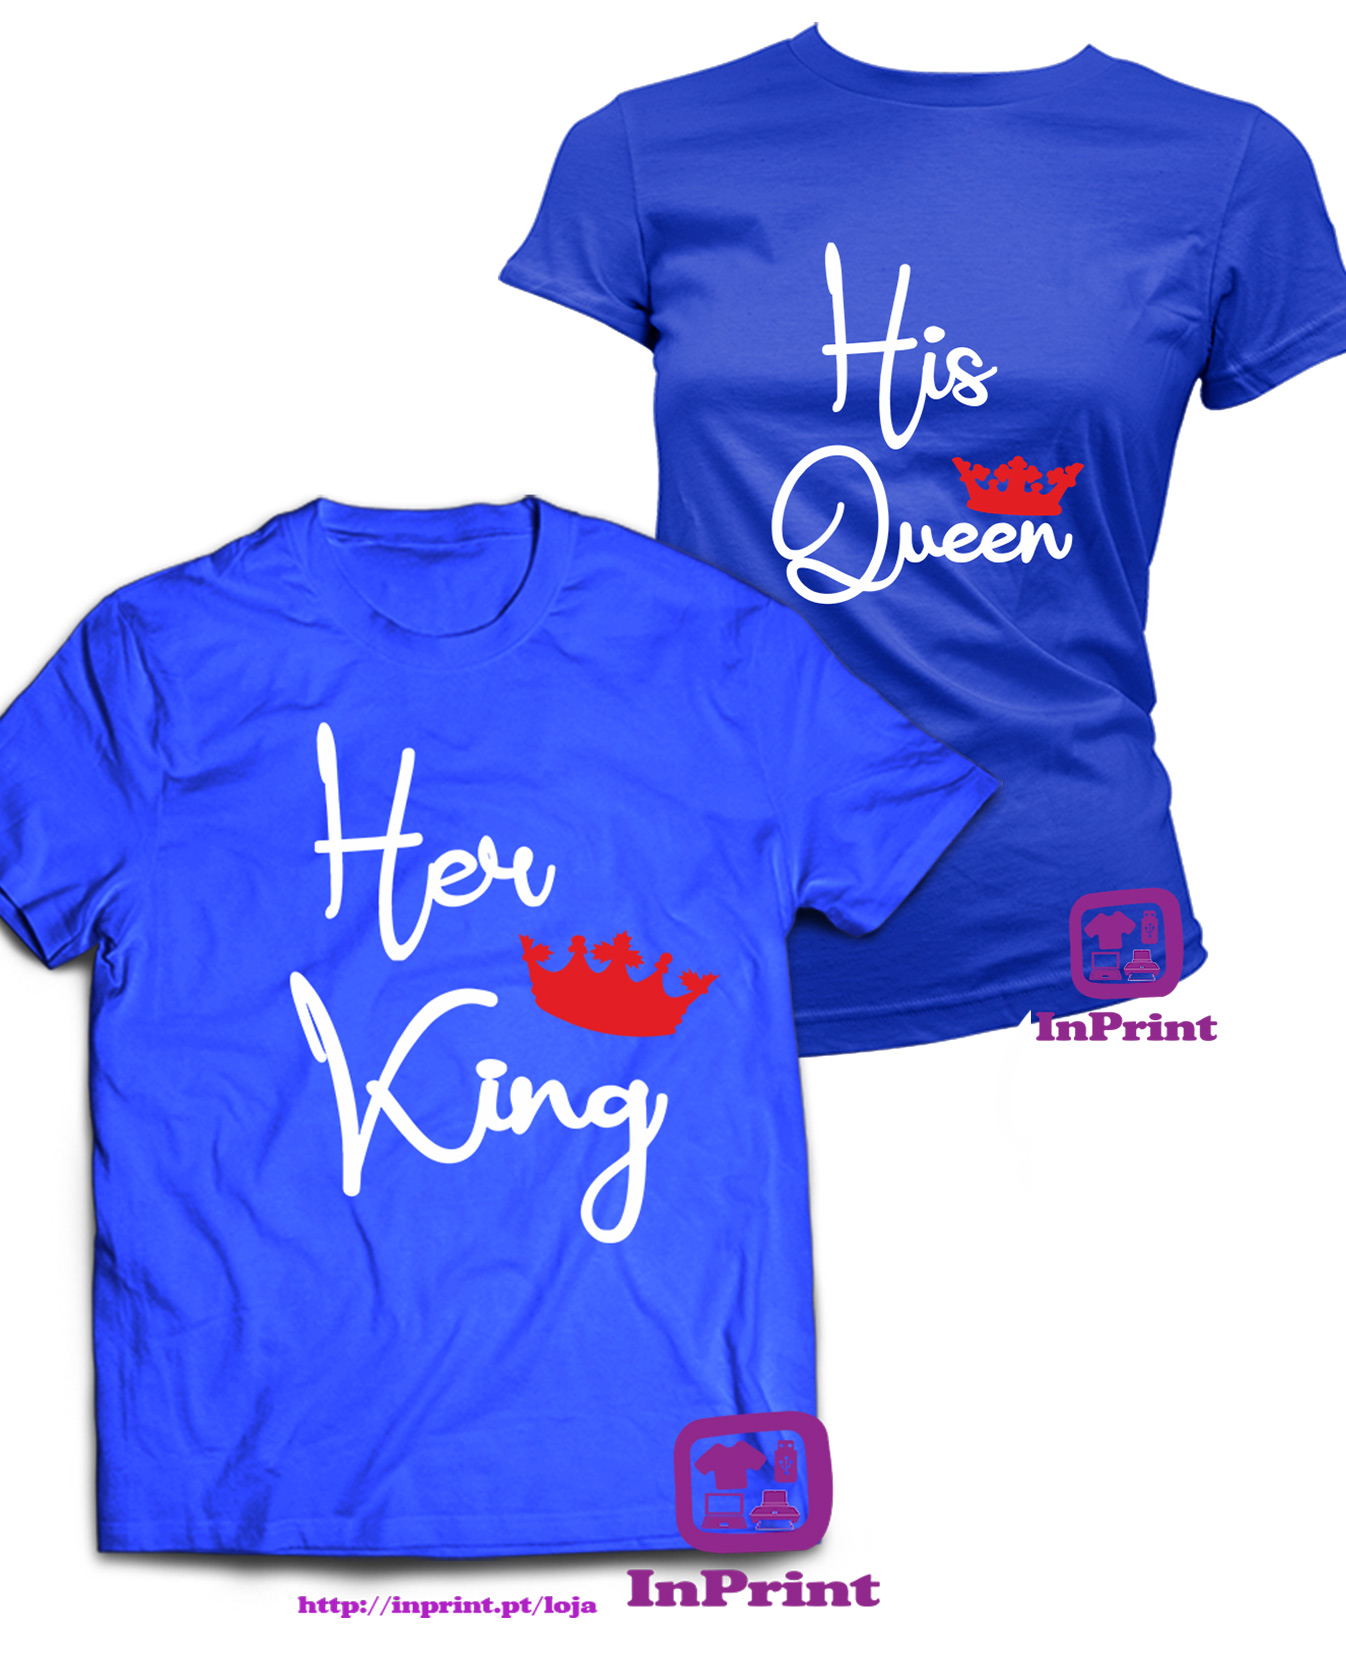 T-shirts “King Queen” par